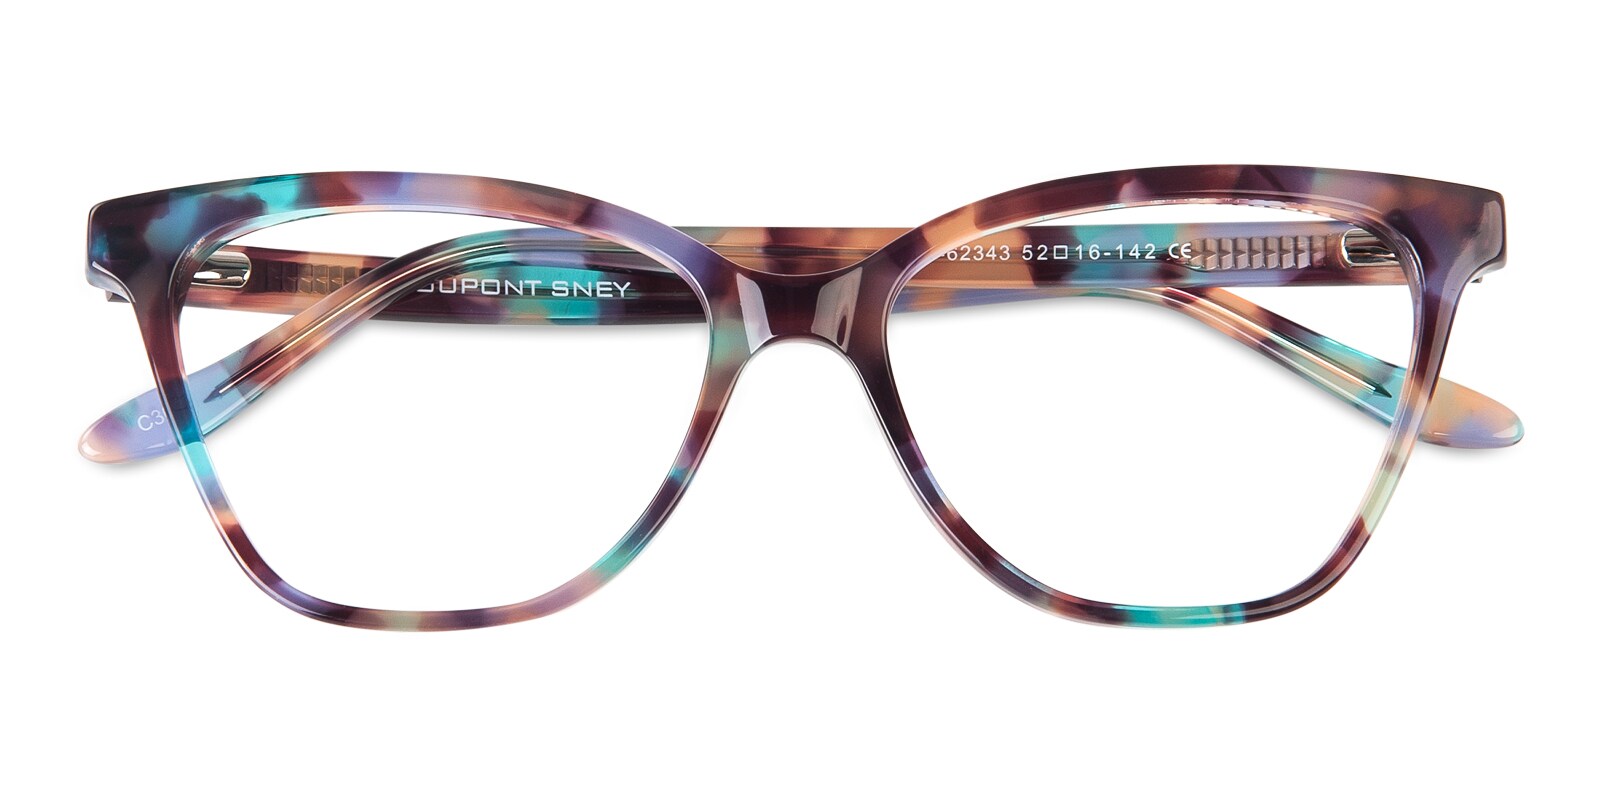 Buy Dervin Unisex Adult Aviator Sunglasses Multicolor Frame, Multicolor Lens  (Medium) - Pack of 5 at Amazon.in